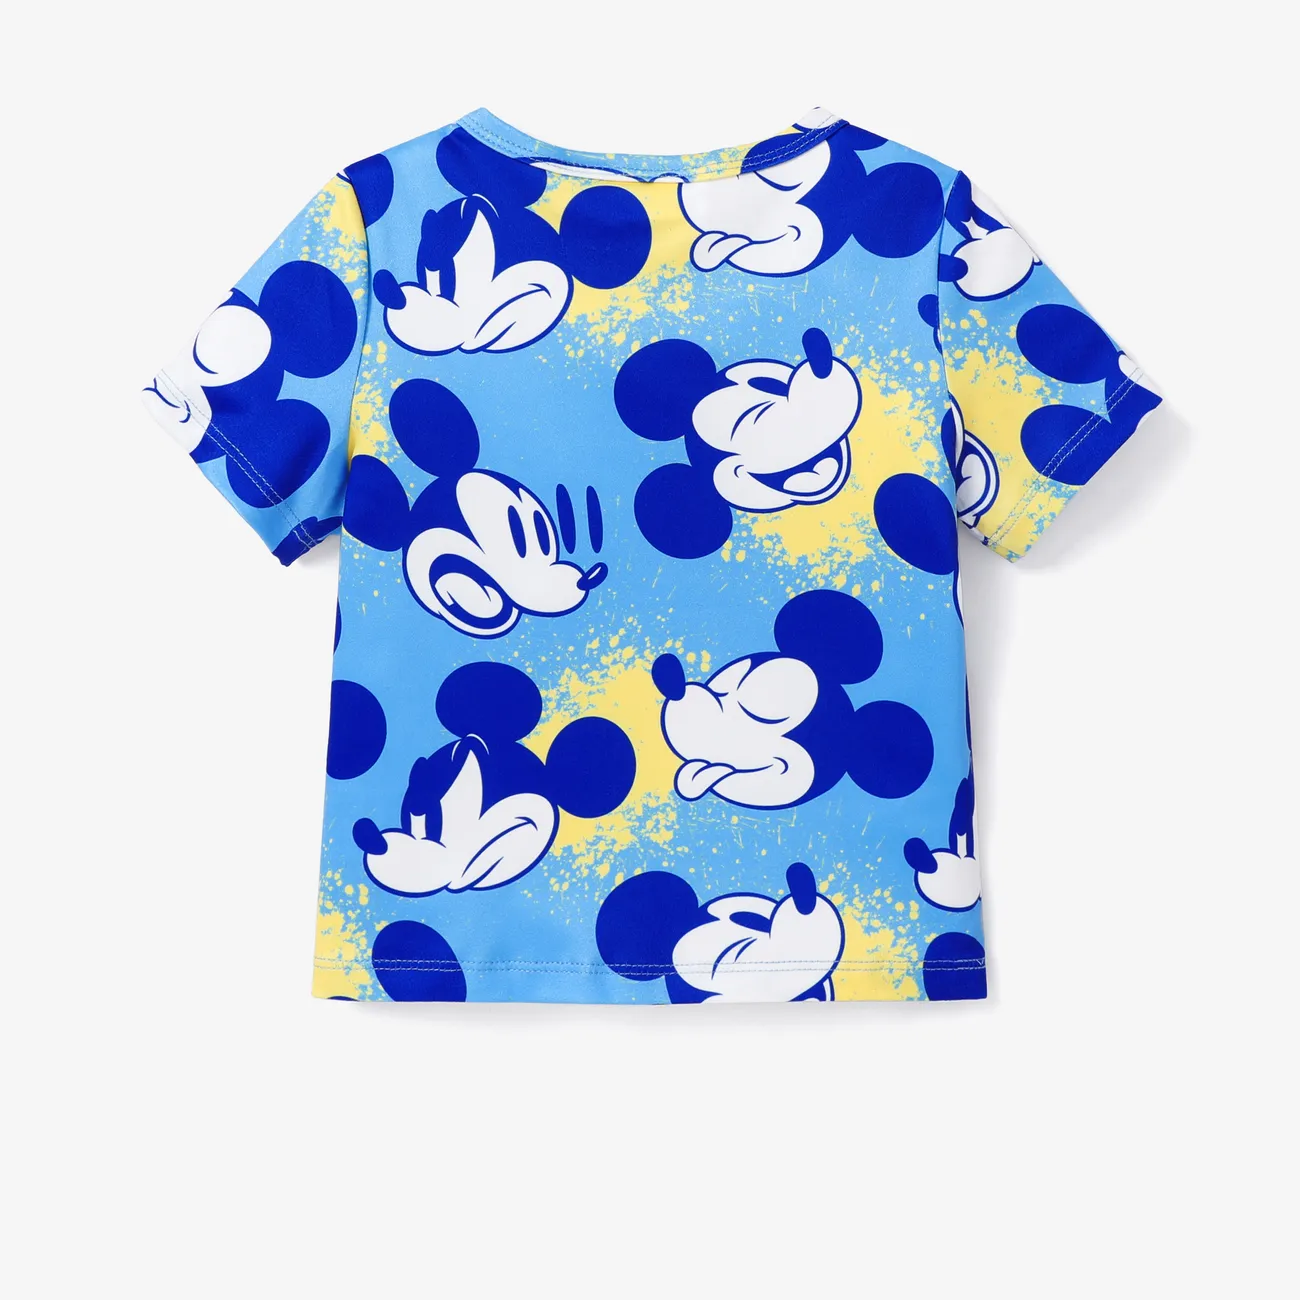 Disney Mickey and Friends Toddler Girl / Toddler Boy Tye-dyed Tee ou shorts jeans estampados Azul big image 1